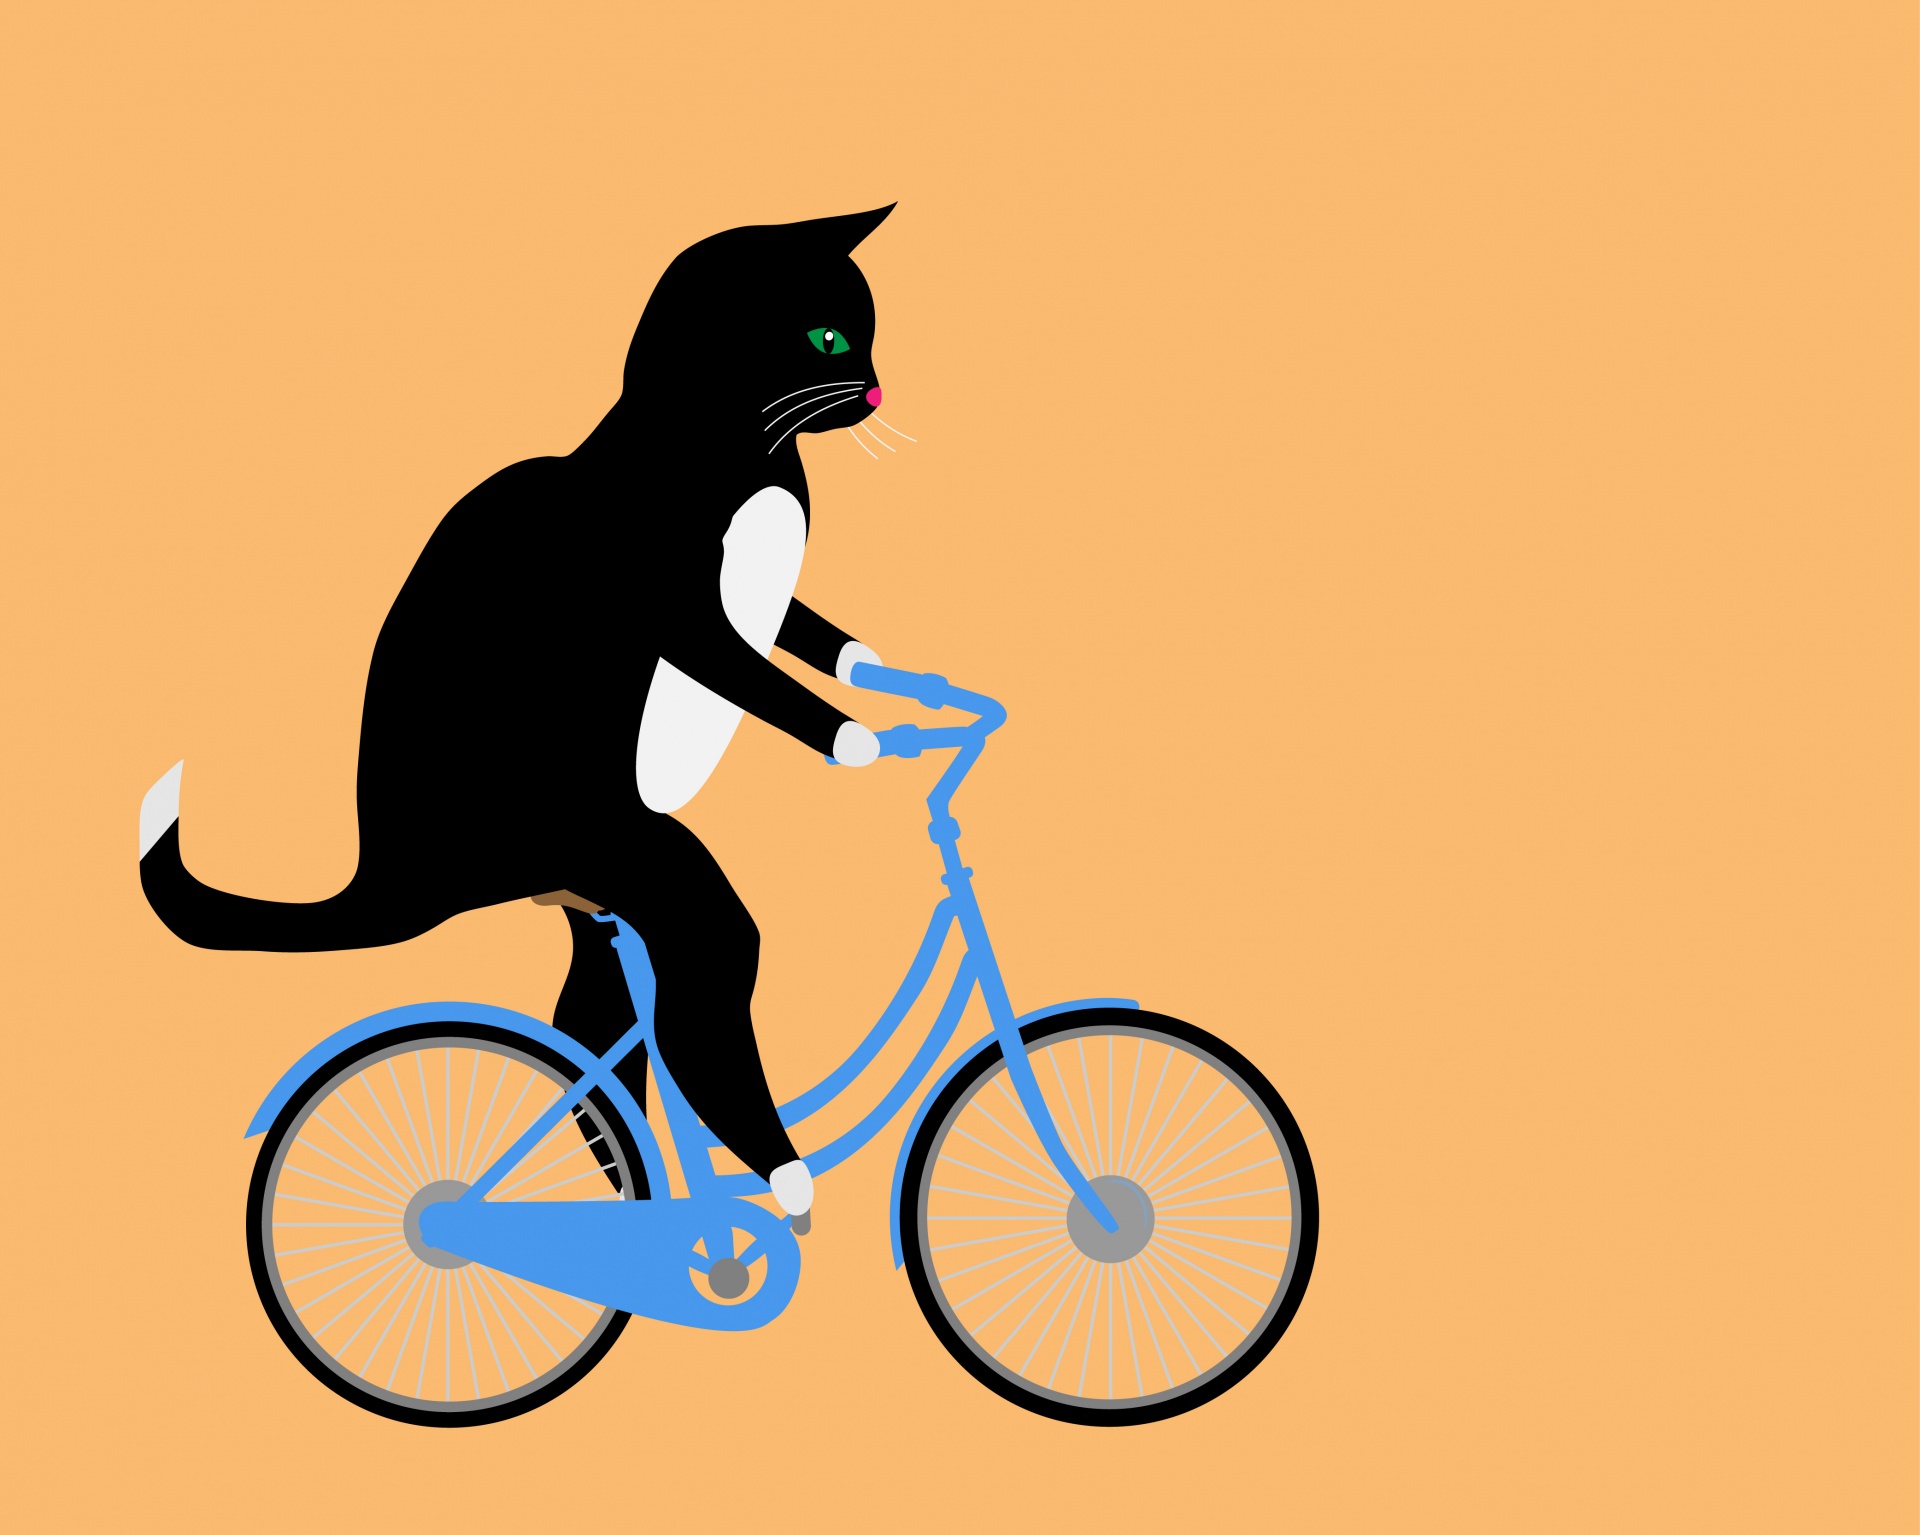 Cat Riding Bicycle